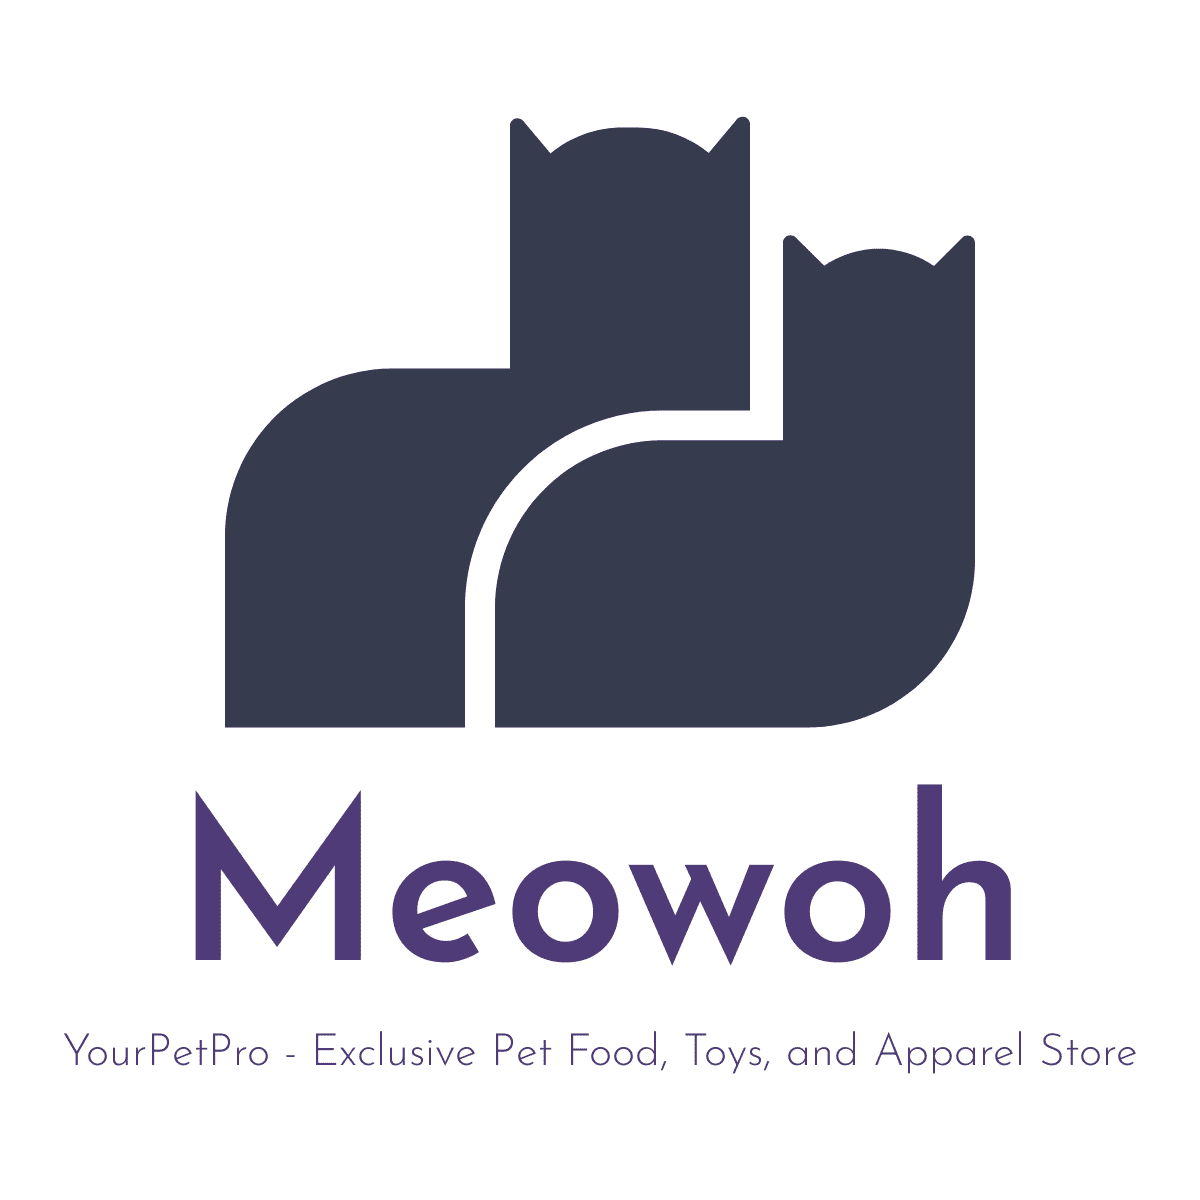 Meowoh